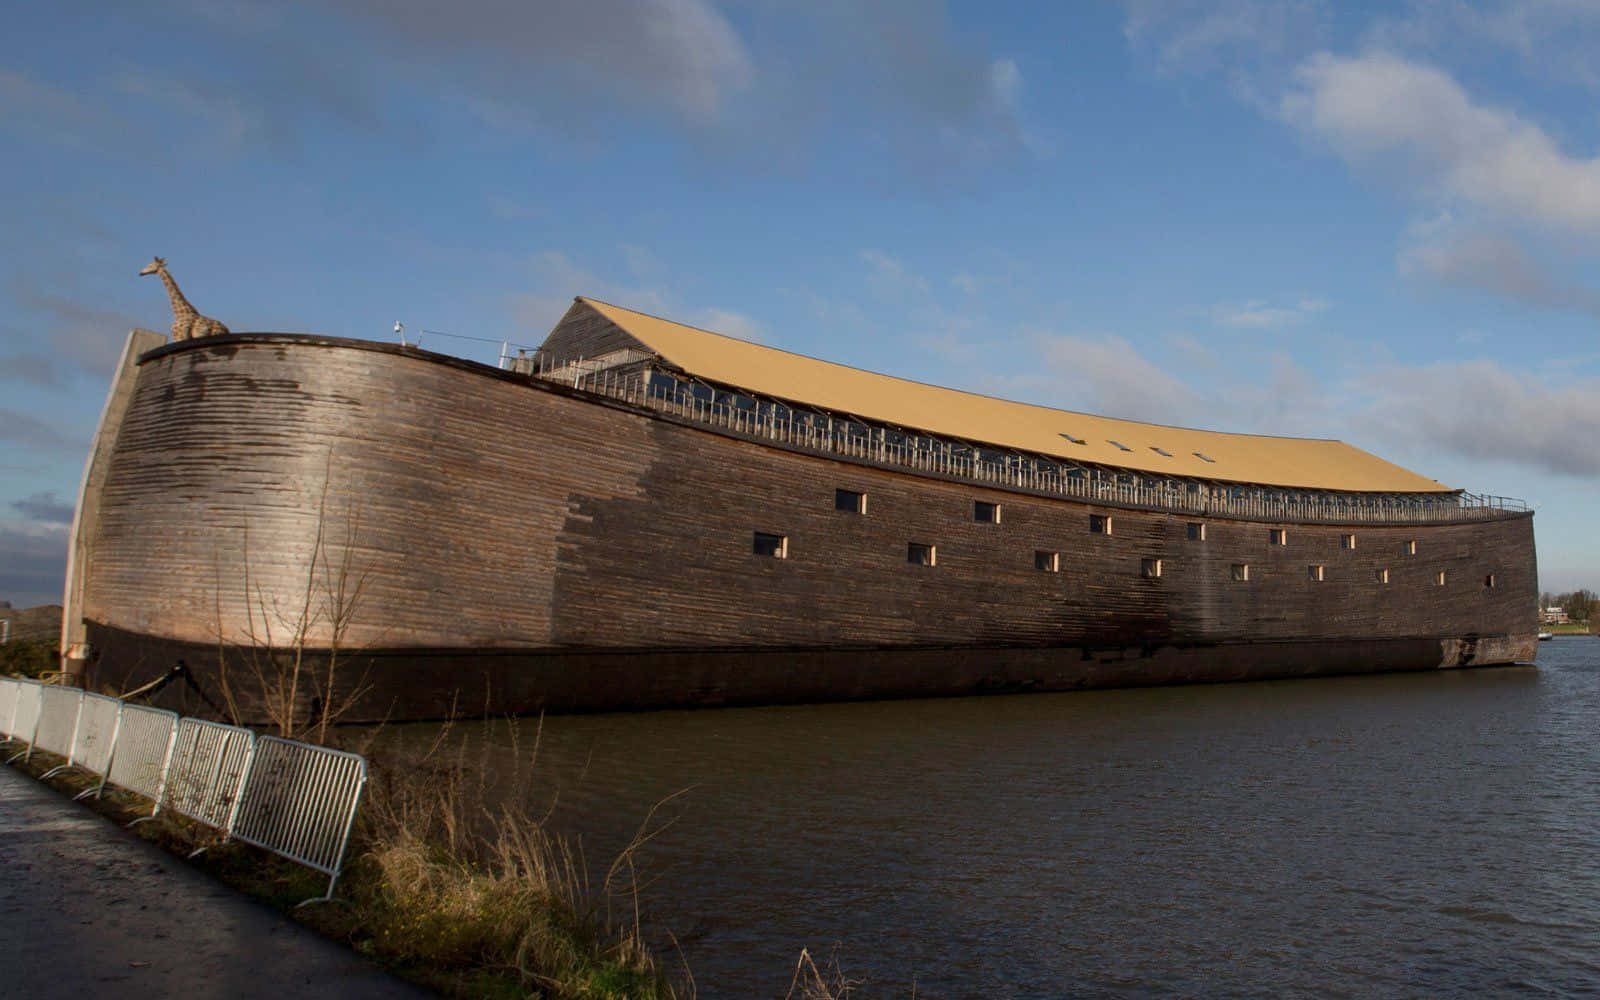 Noah's Ark - Saving Humanity